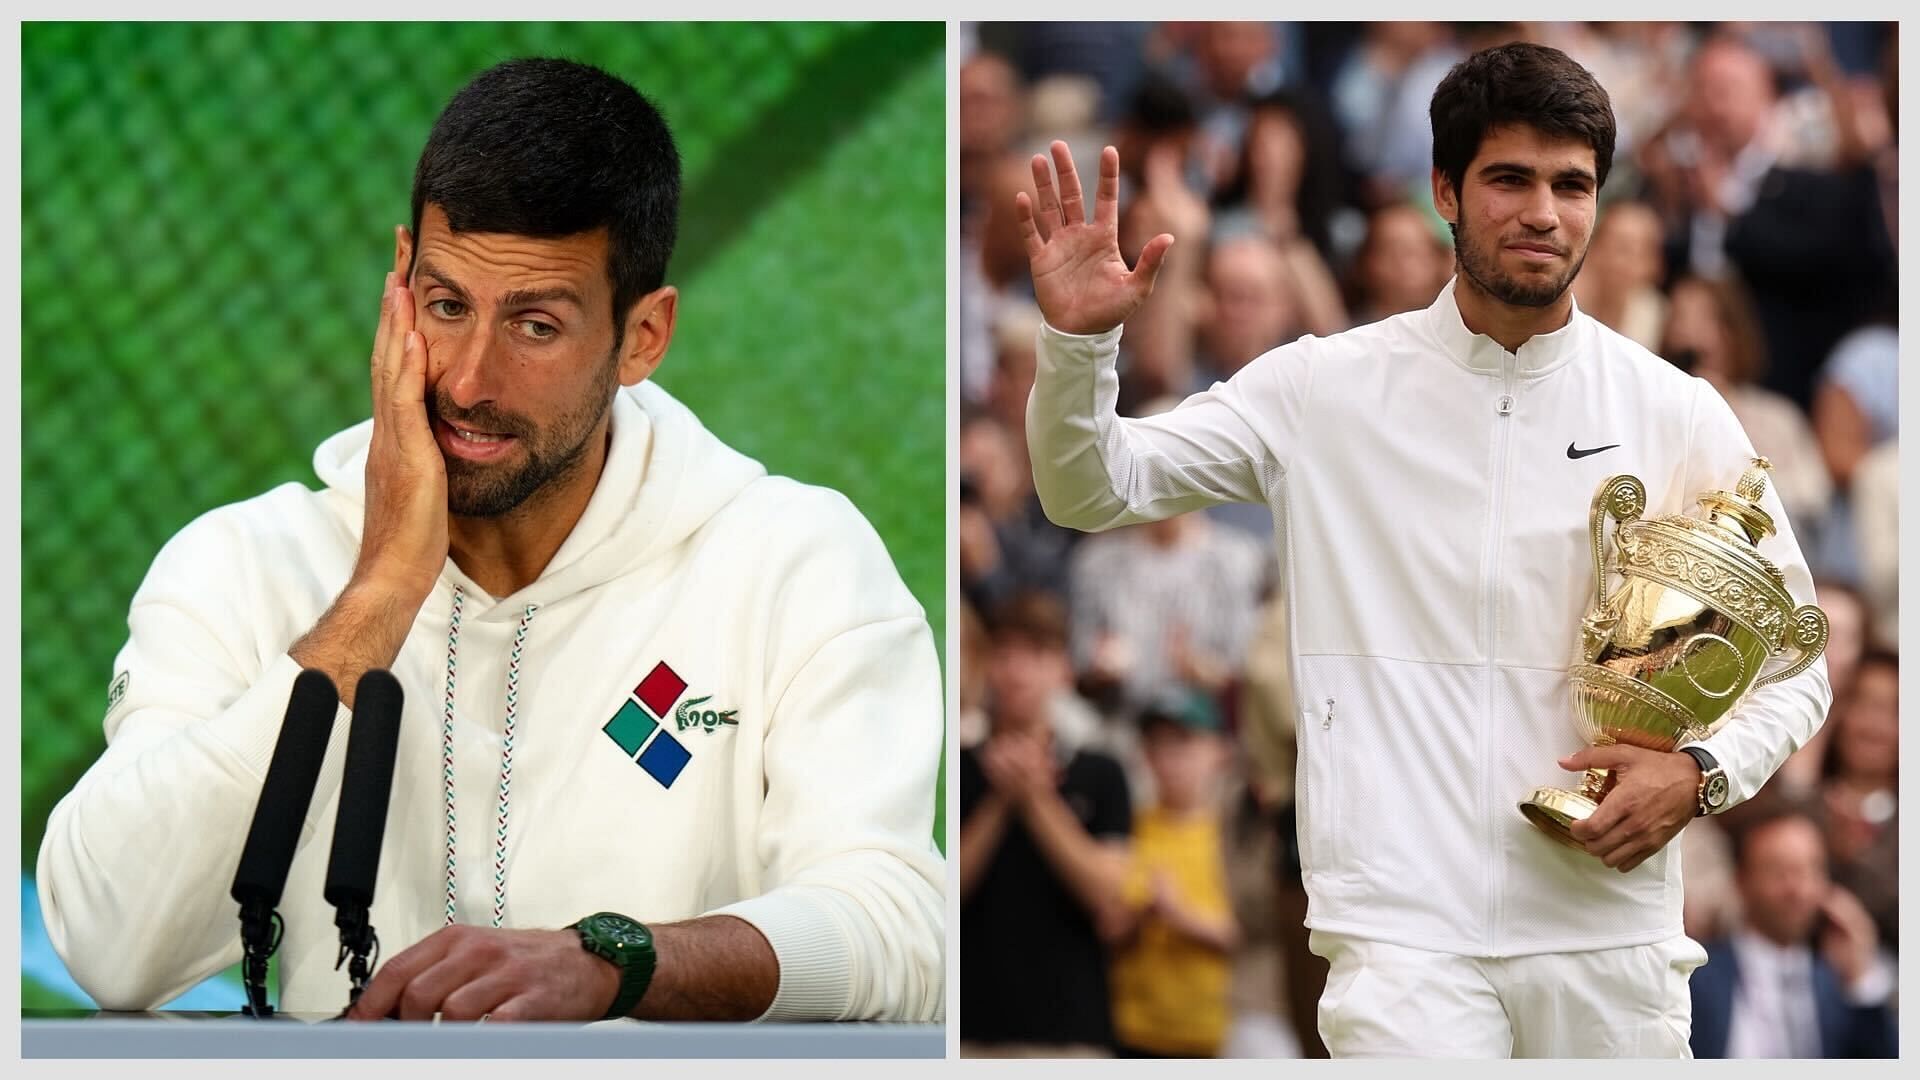 Novak Djokovic lost to Carlos Alcaraz in the 2023 Wimbledon Championships final.